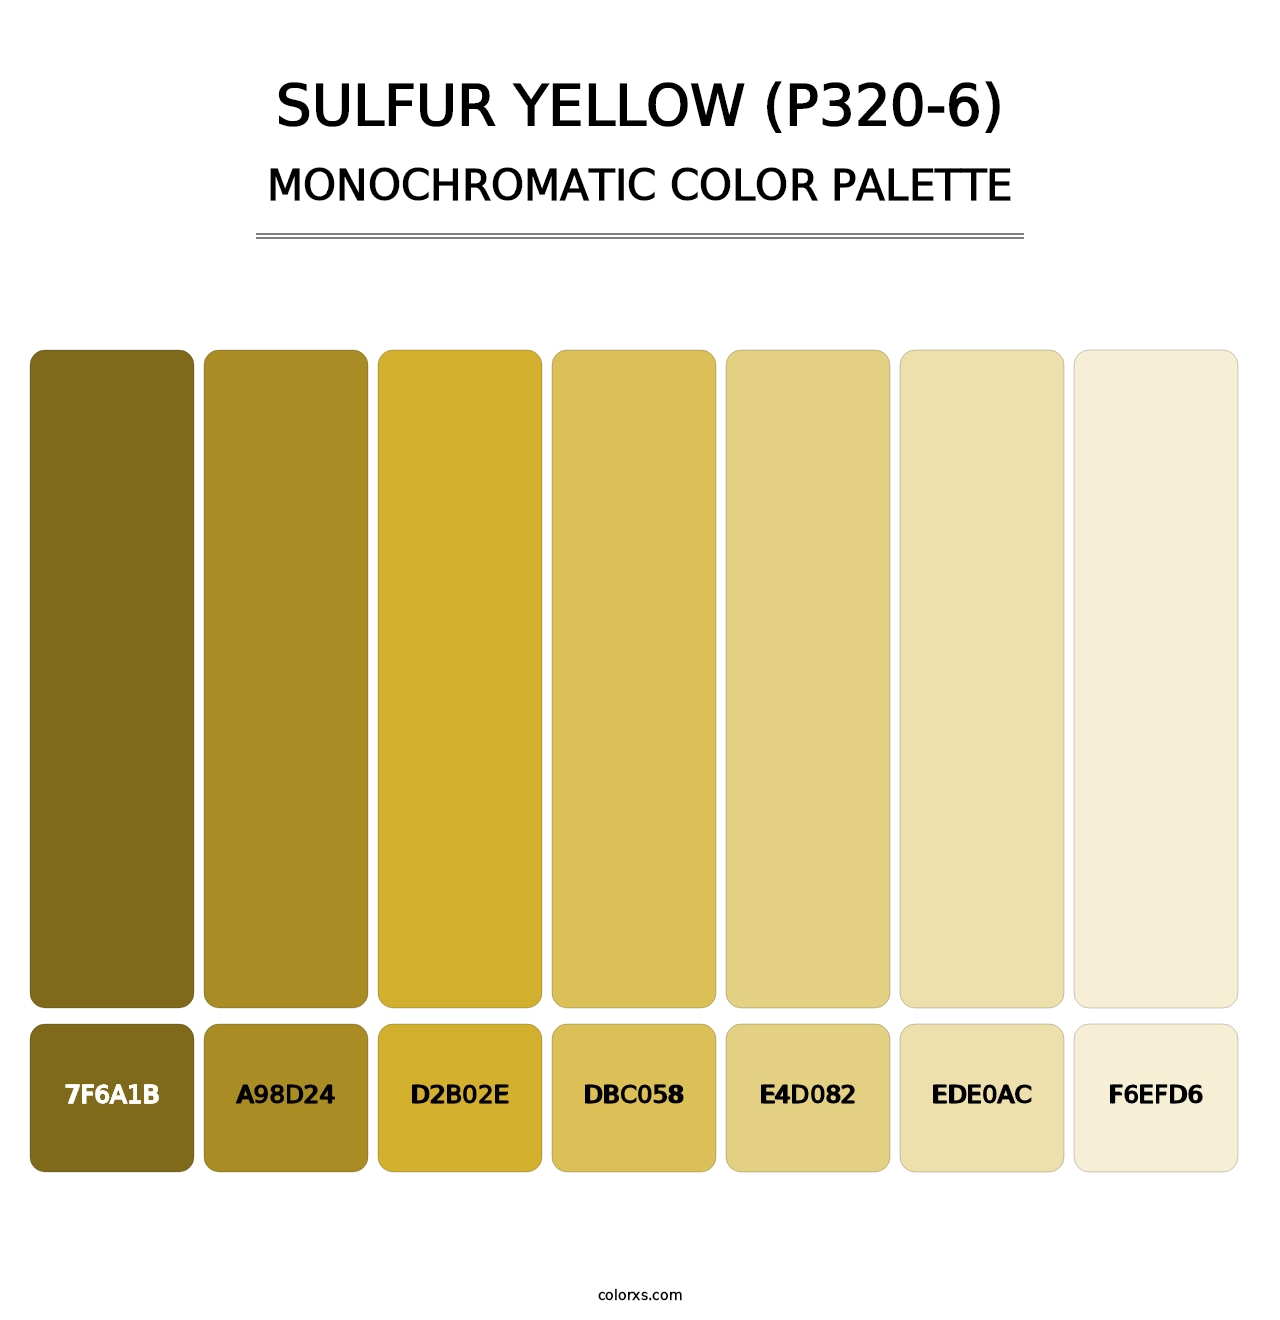 Sulfur Yellow (P320-6) - Monochromatic Color Palette